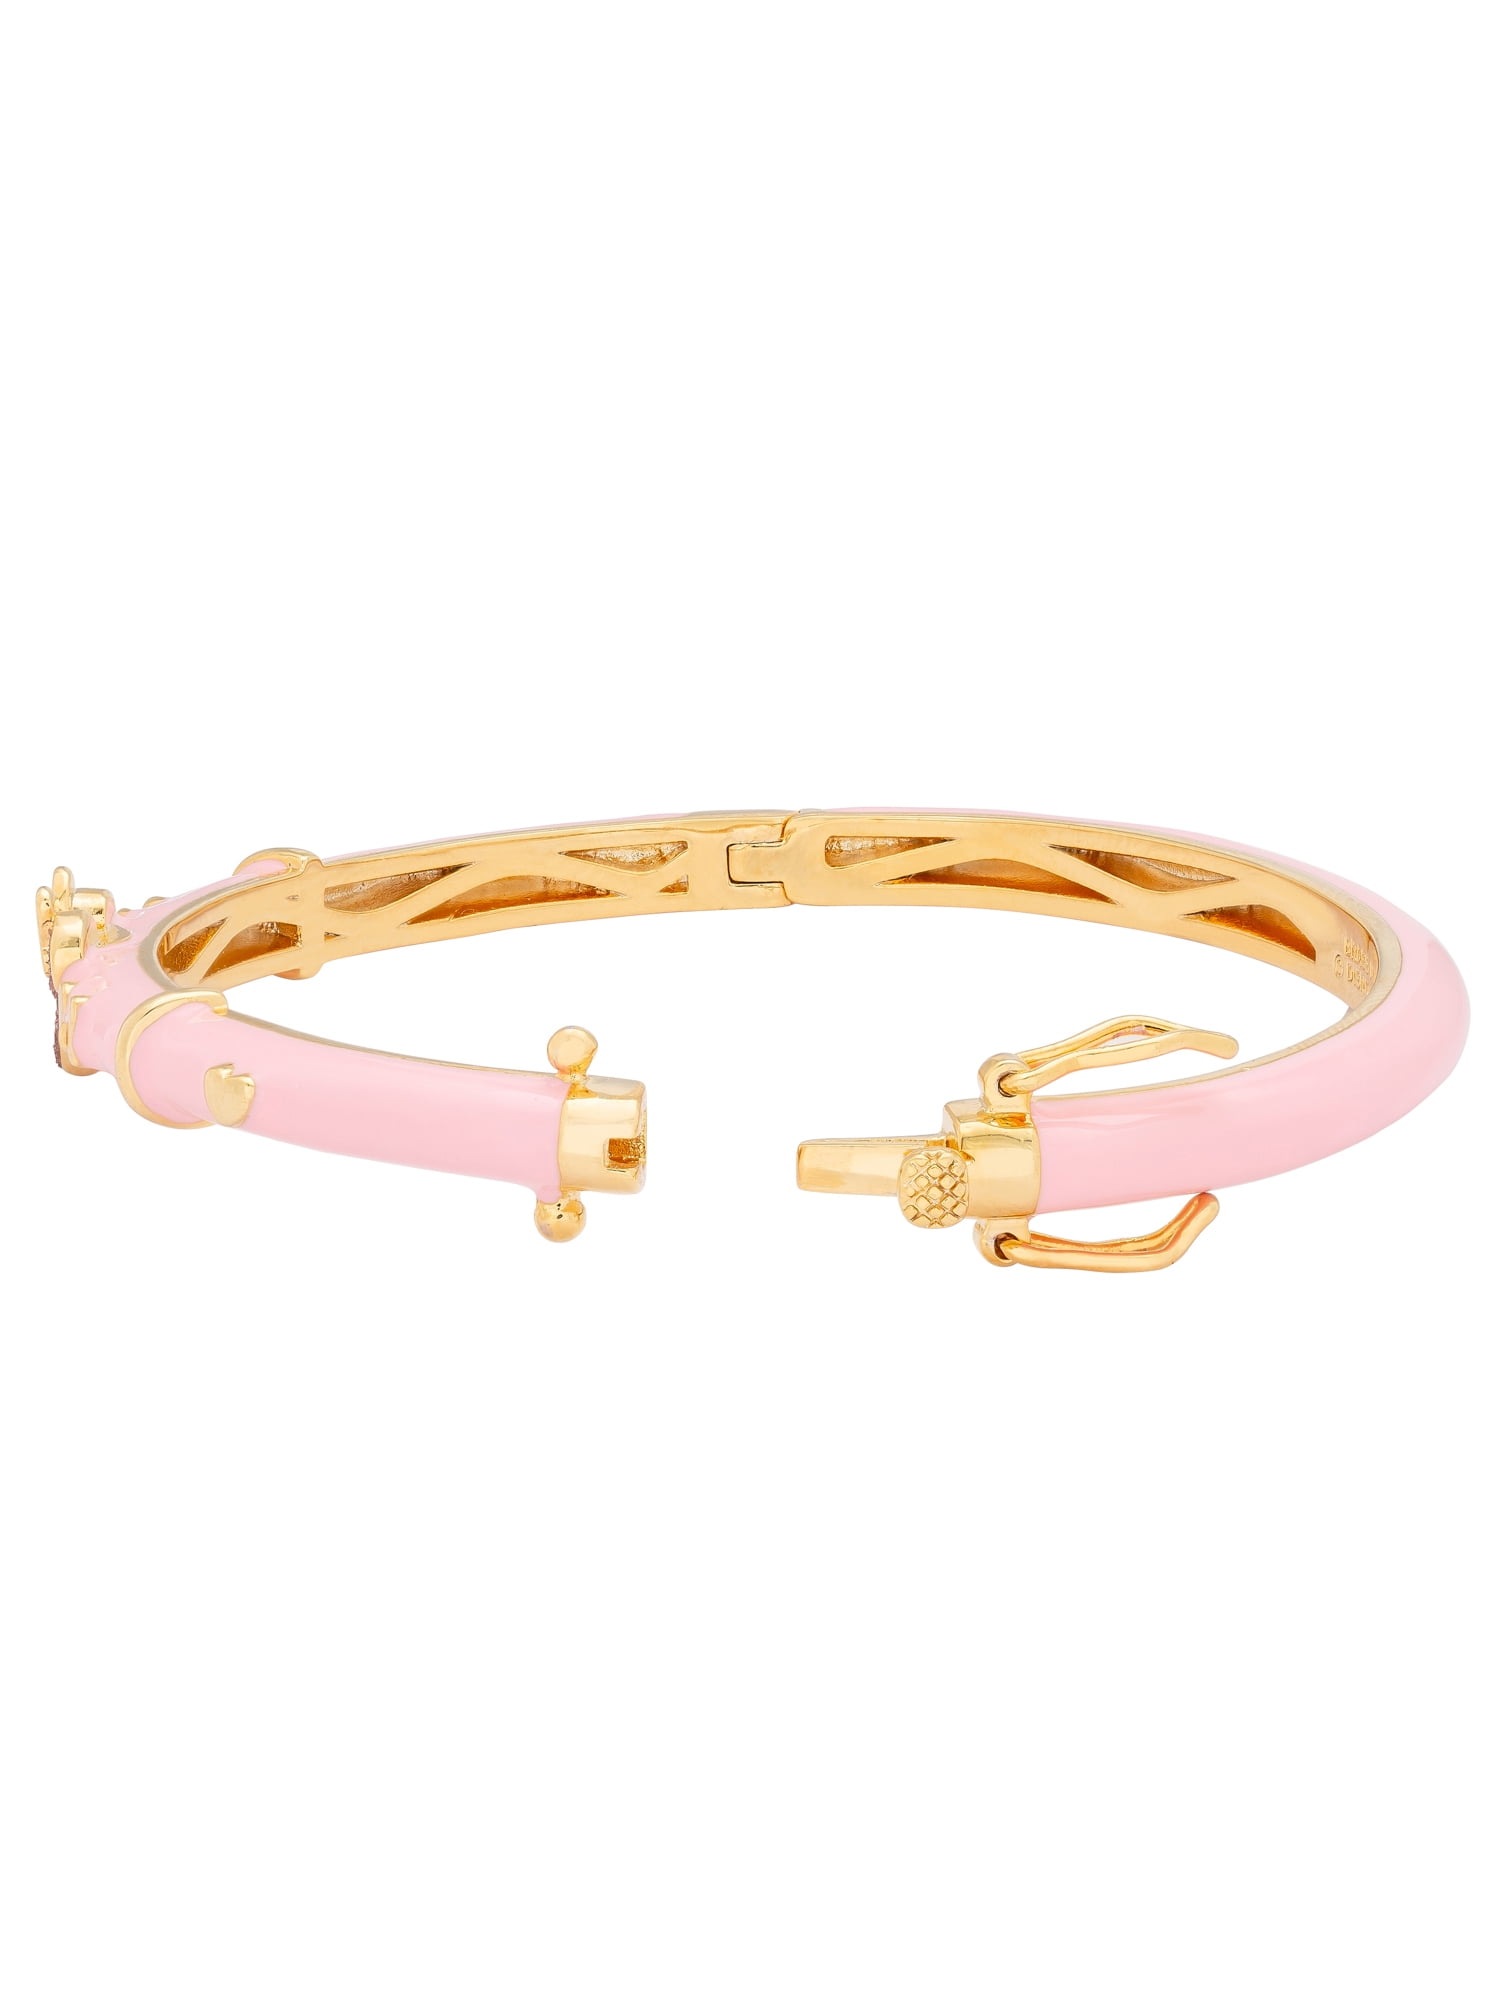 Pink and Red Enamel Heart Bangle Bracelet in 18kt Gold Over Sterling |  Ross-Simons